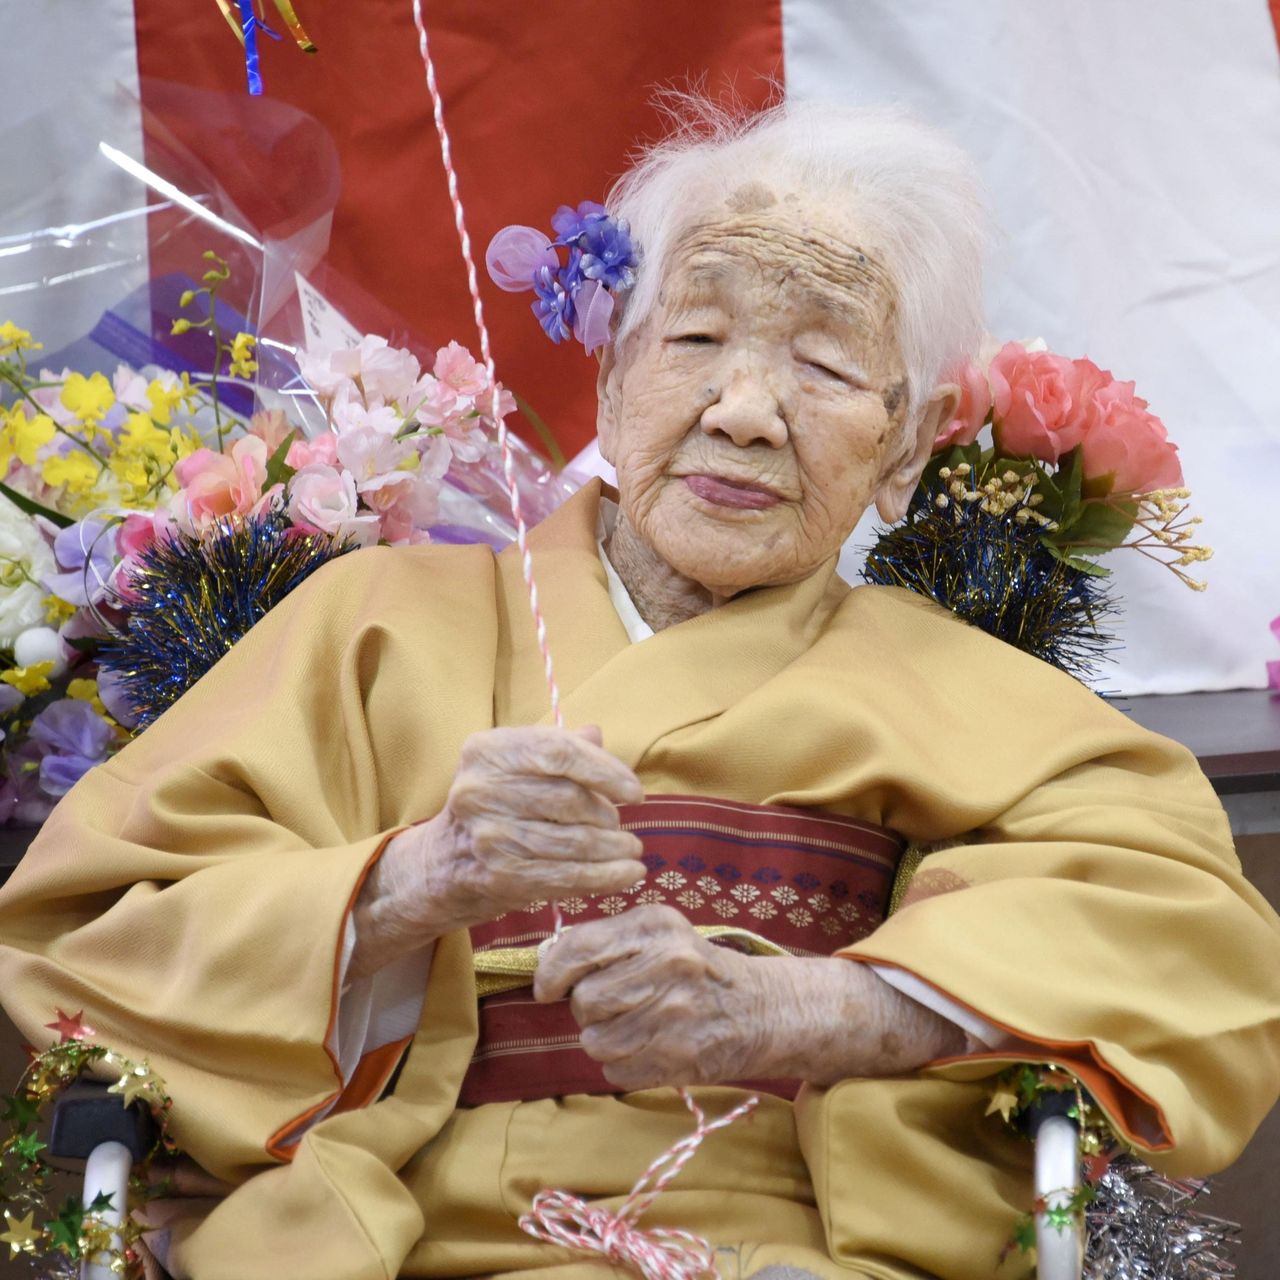 world's oldest person kane tanaka